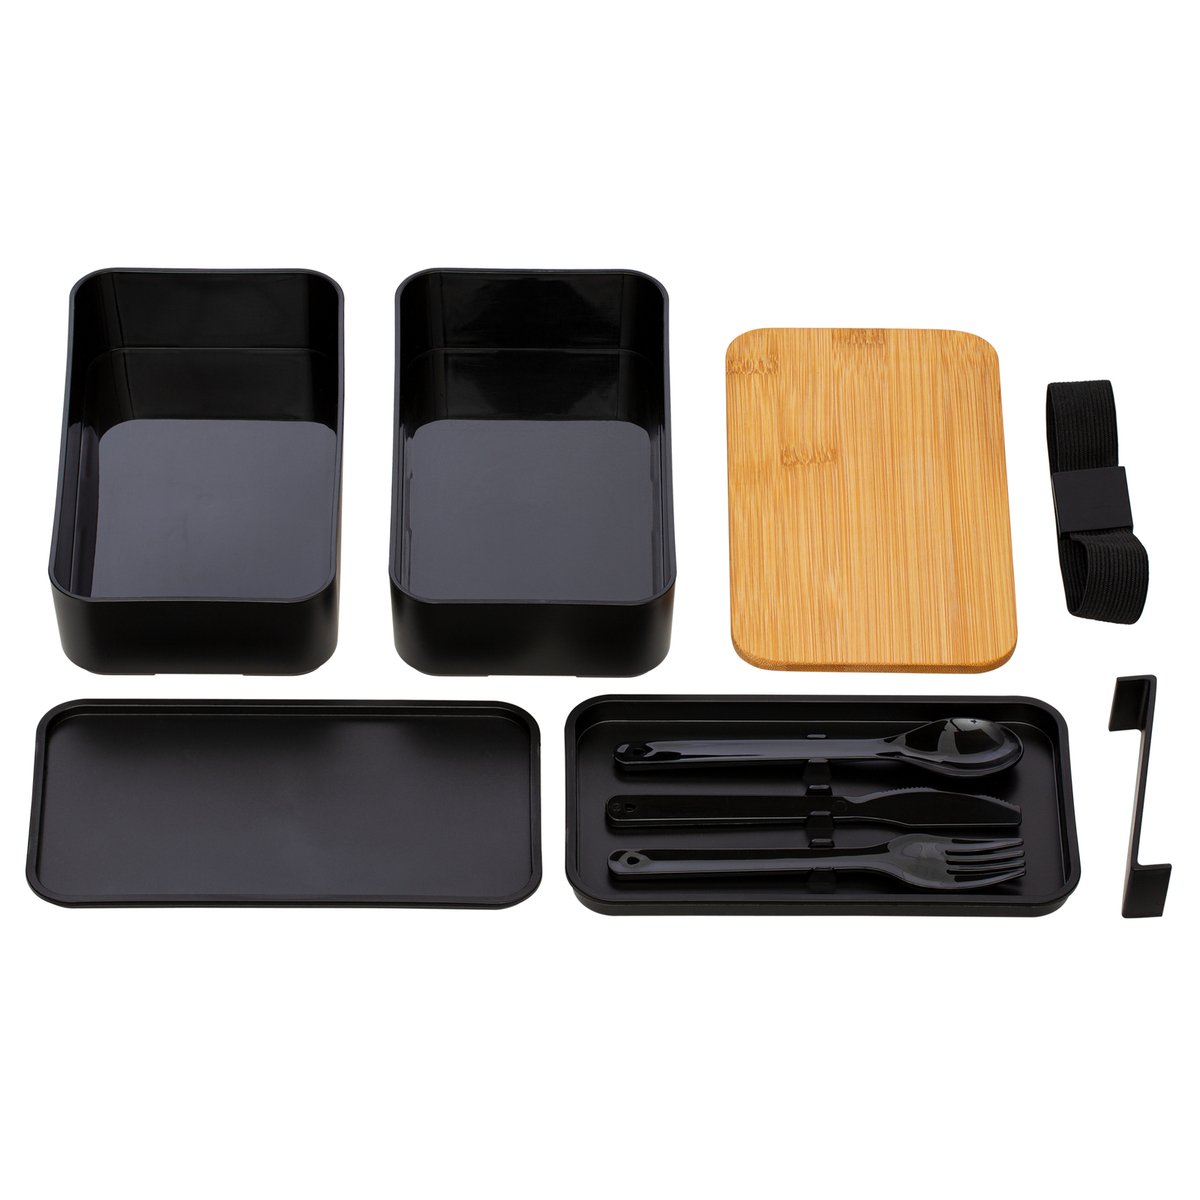 Lunch Kit RE98-LAUDAT black, black